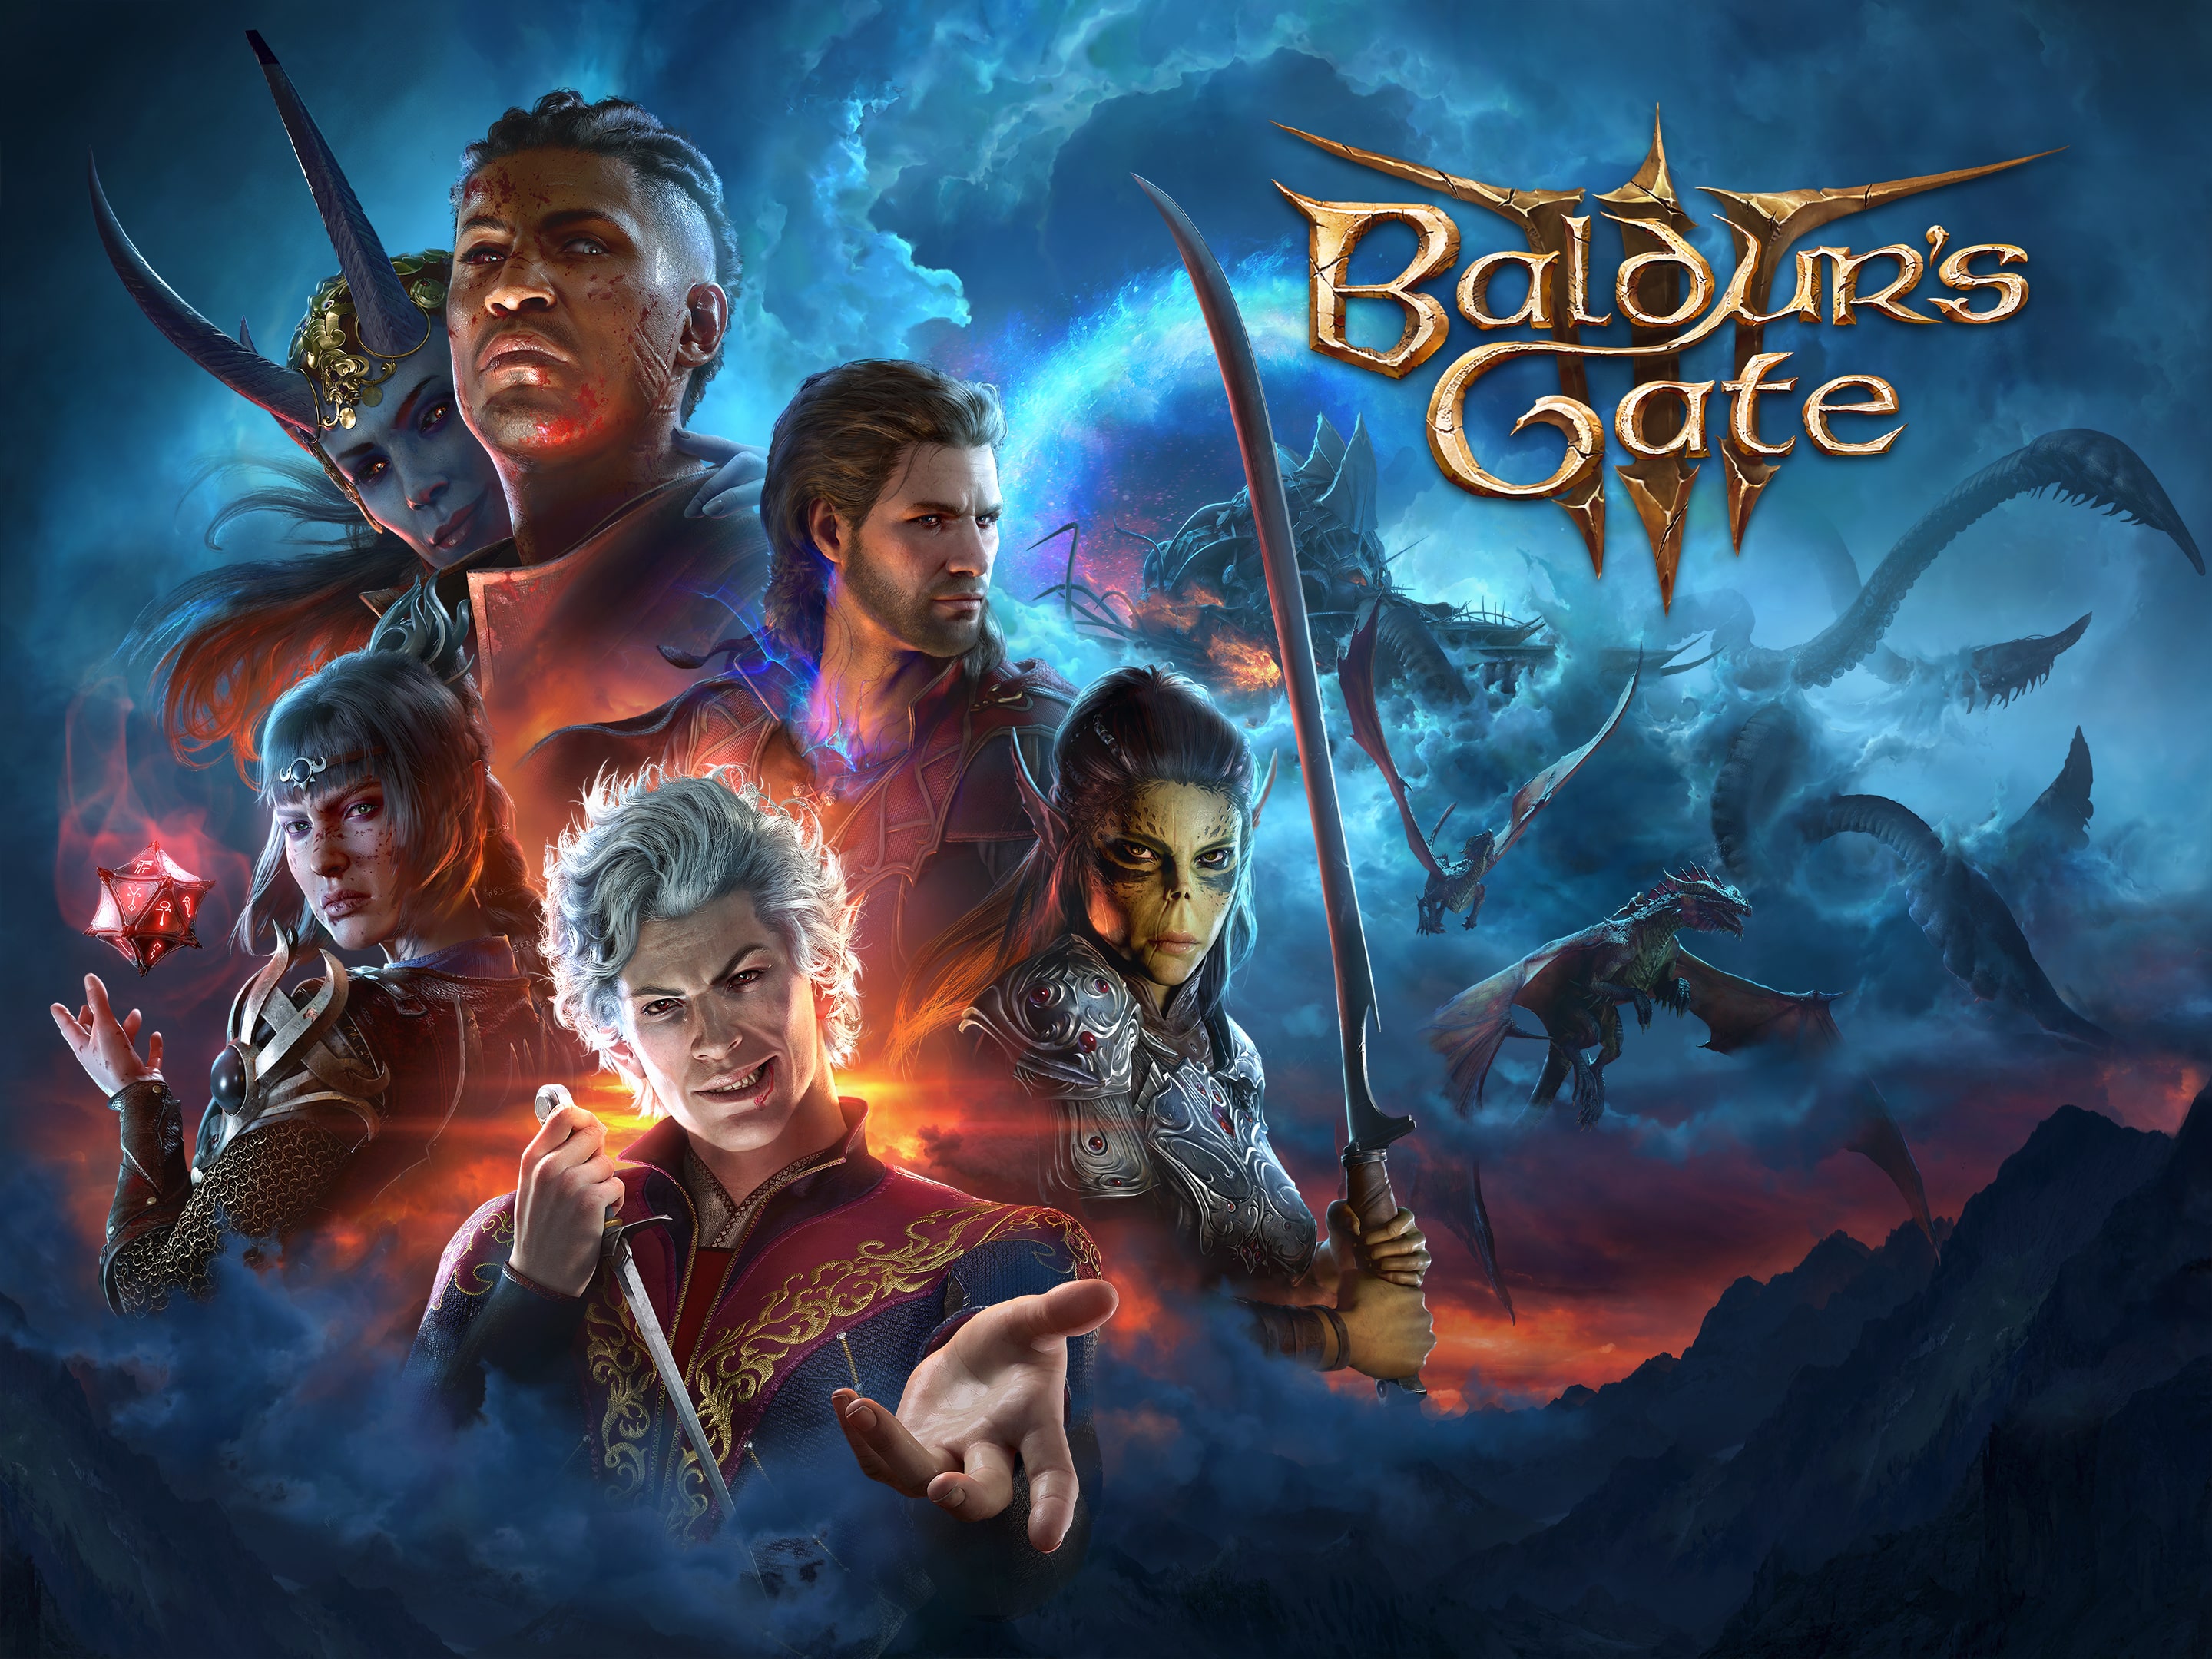 Baldur's Gate 3 (PC Digital Download Game) $51